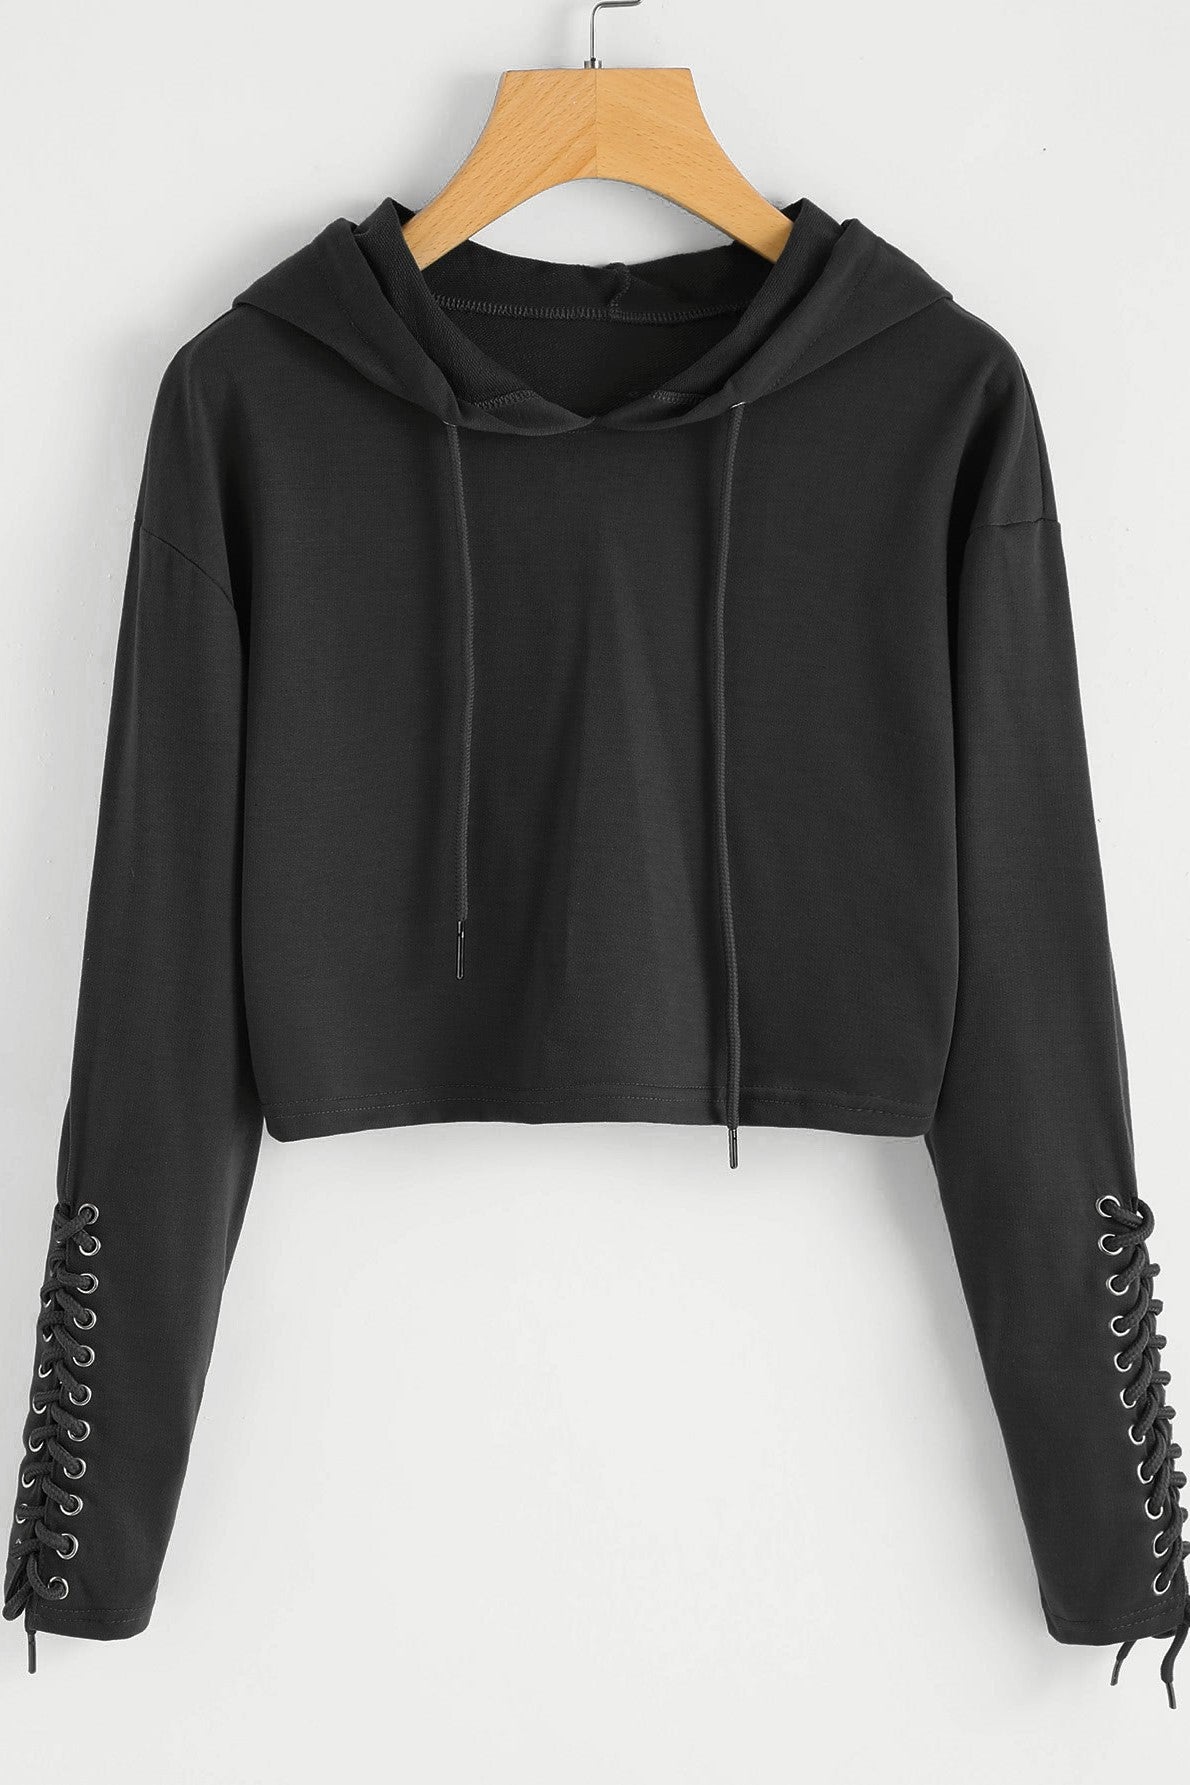 supreme black camo hoodie